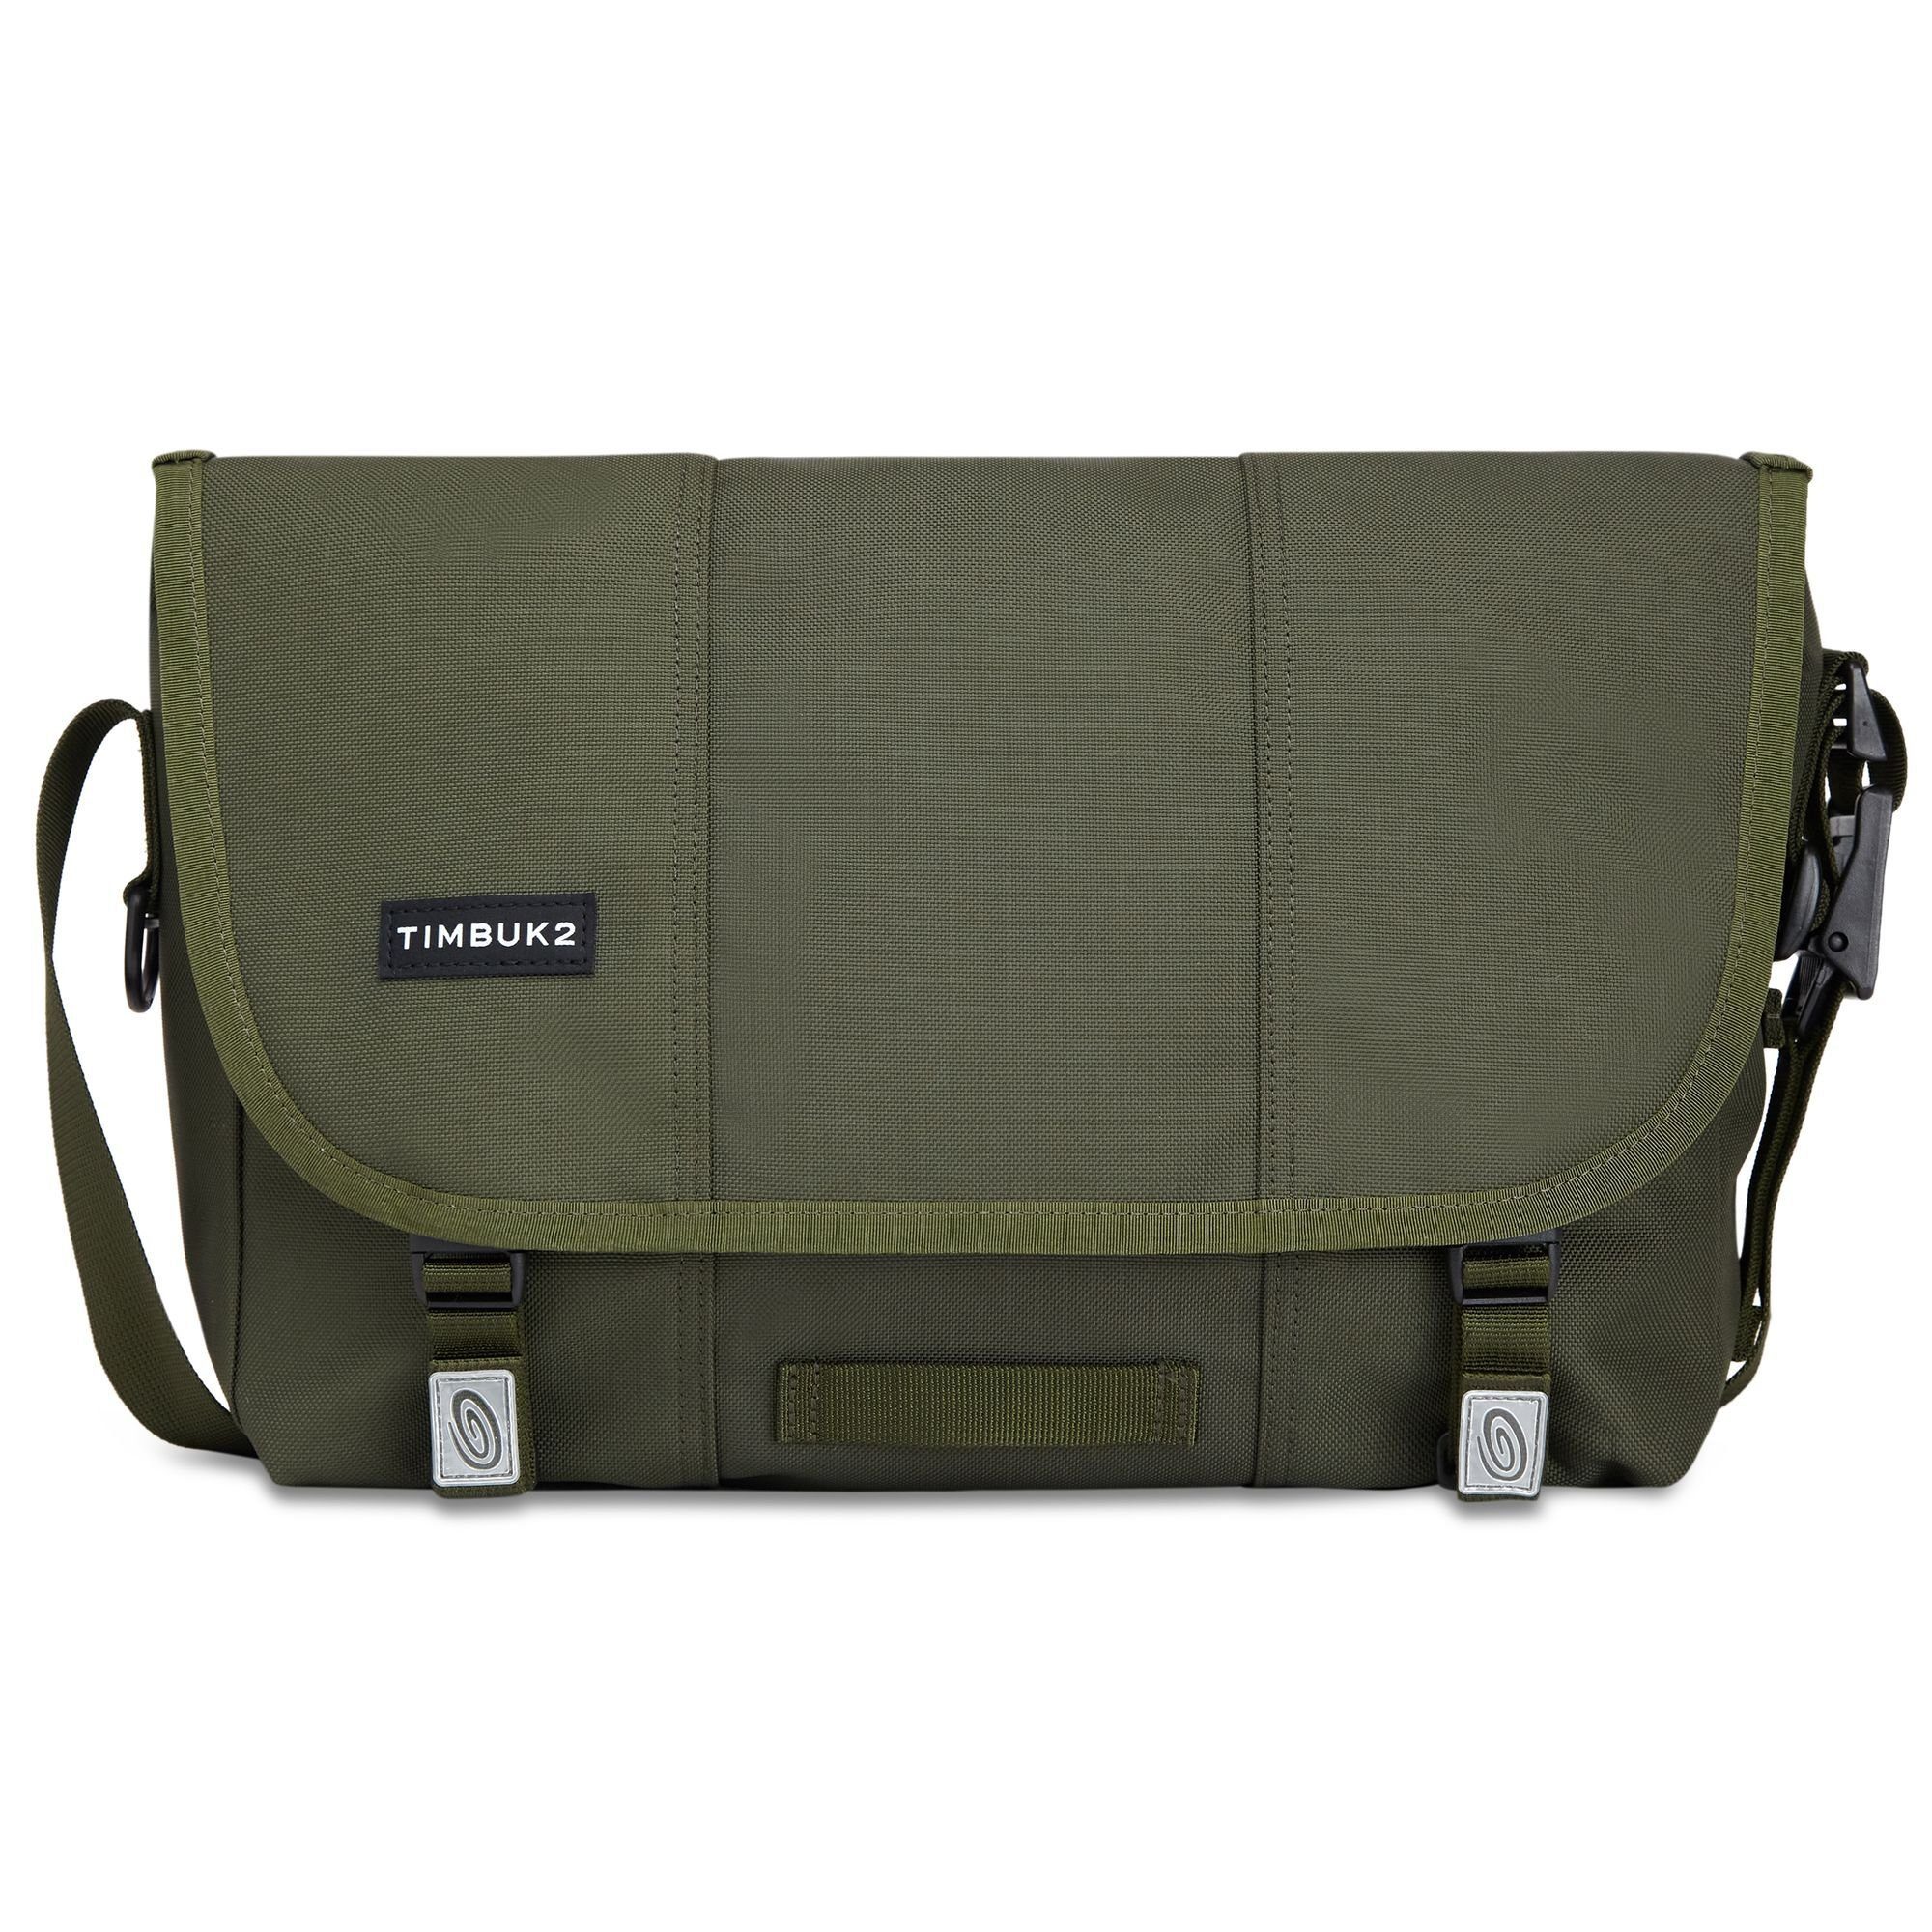 Timbuk2 Messenger Bag Classic, Nylon army eco